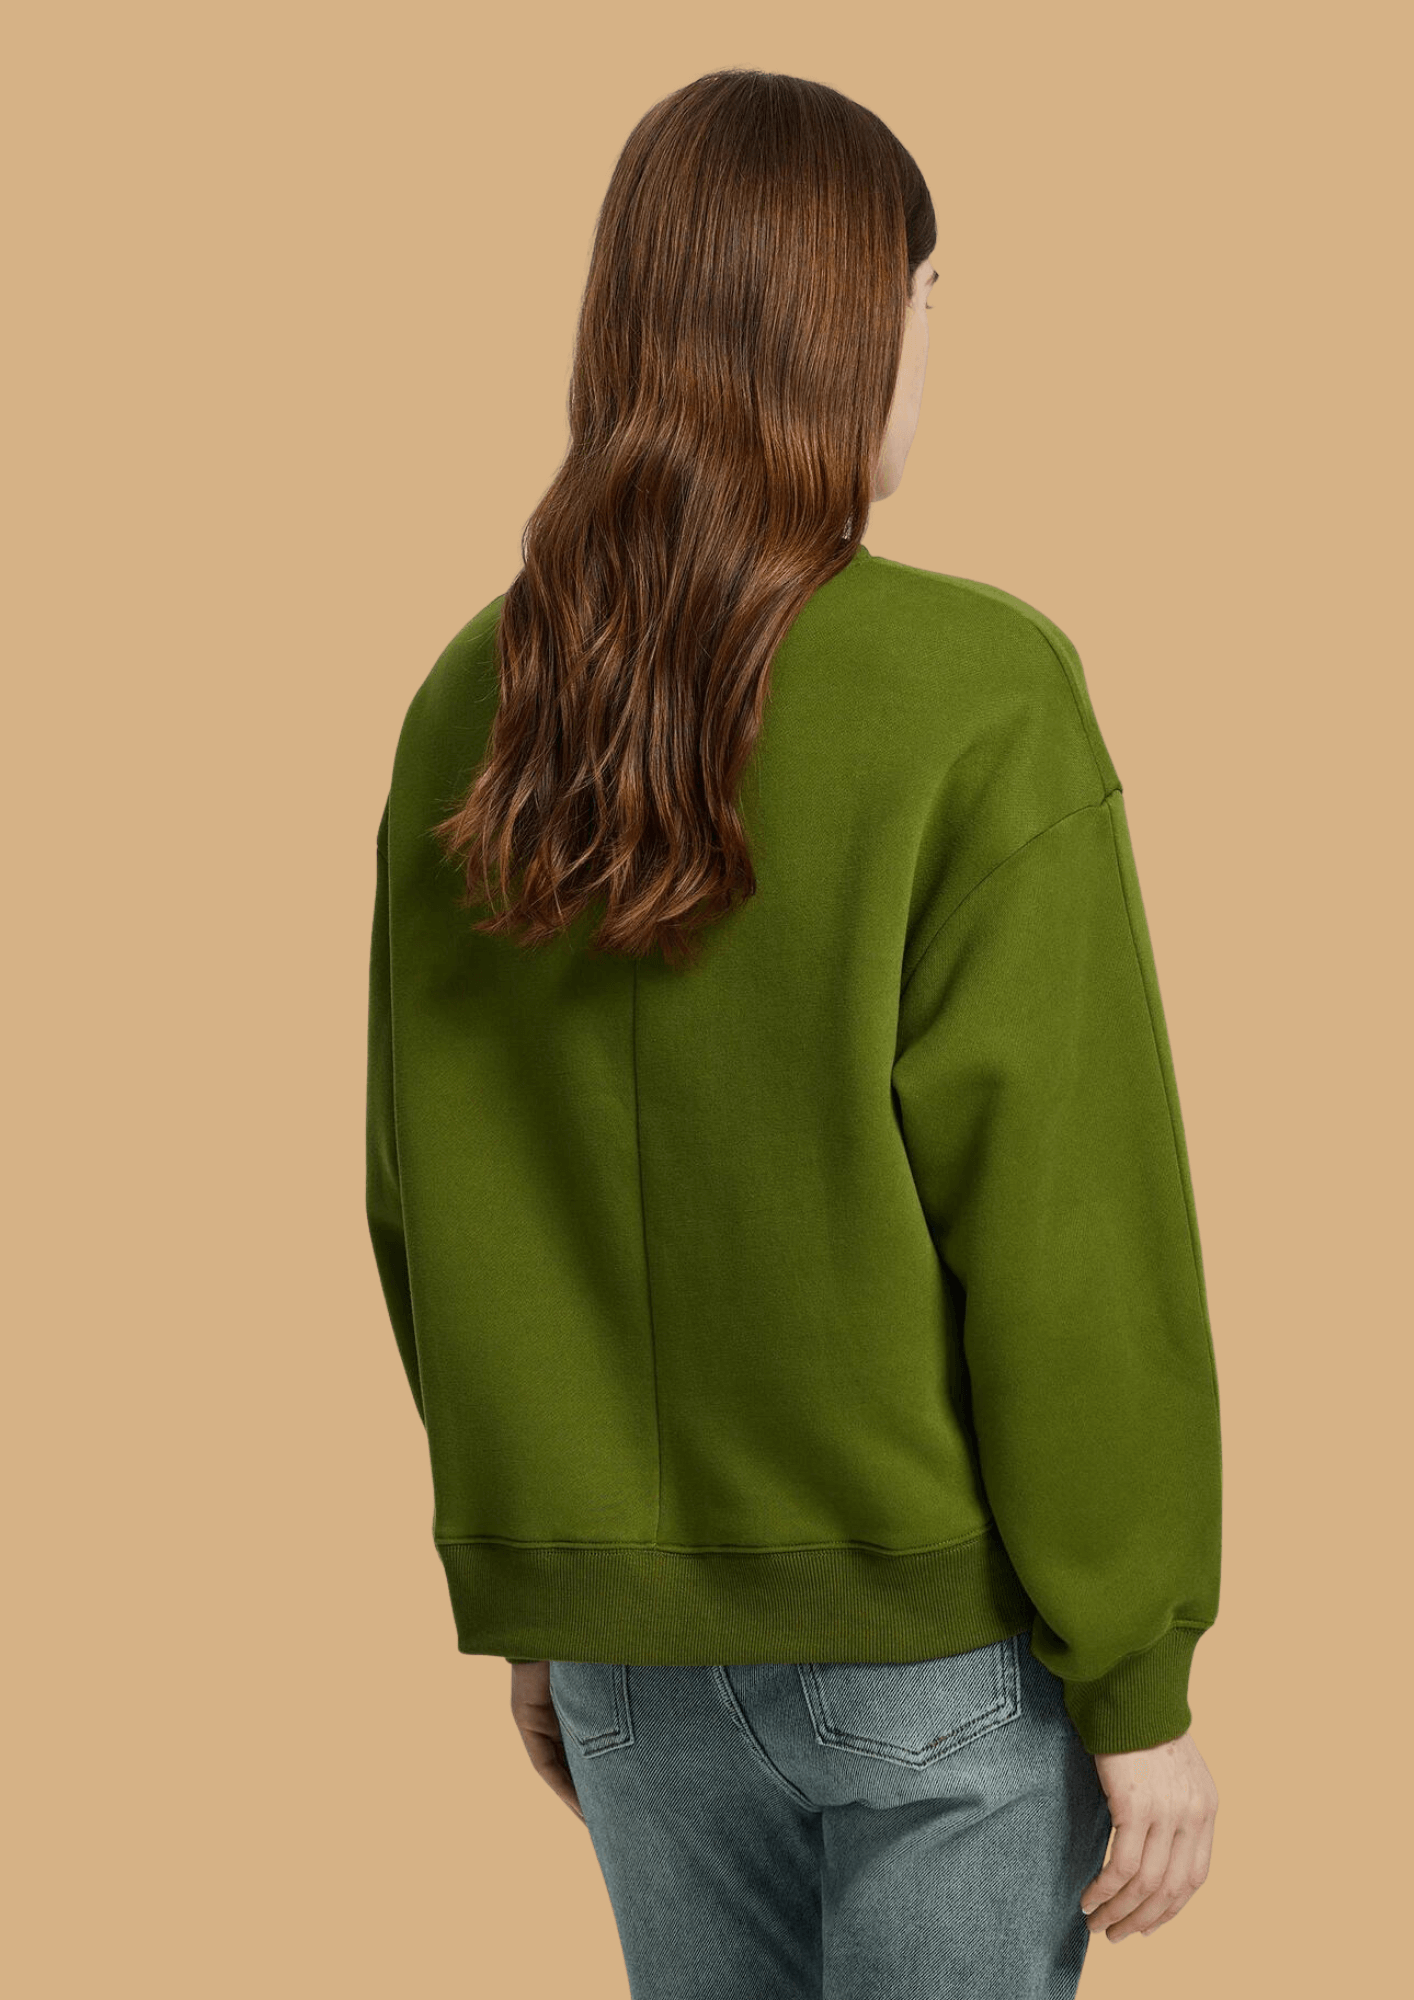 Virtue printed olive green color women's sweatshirt 